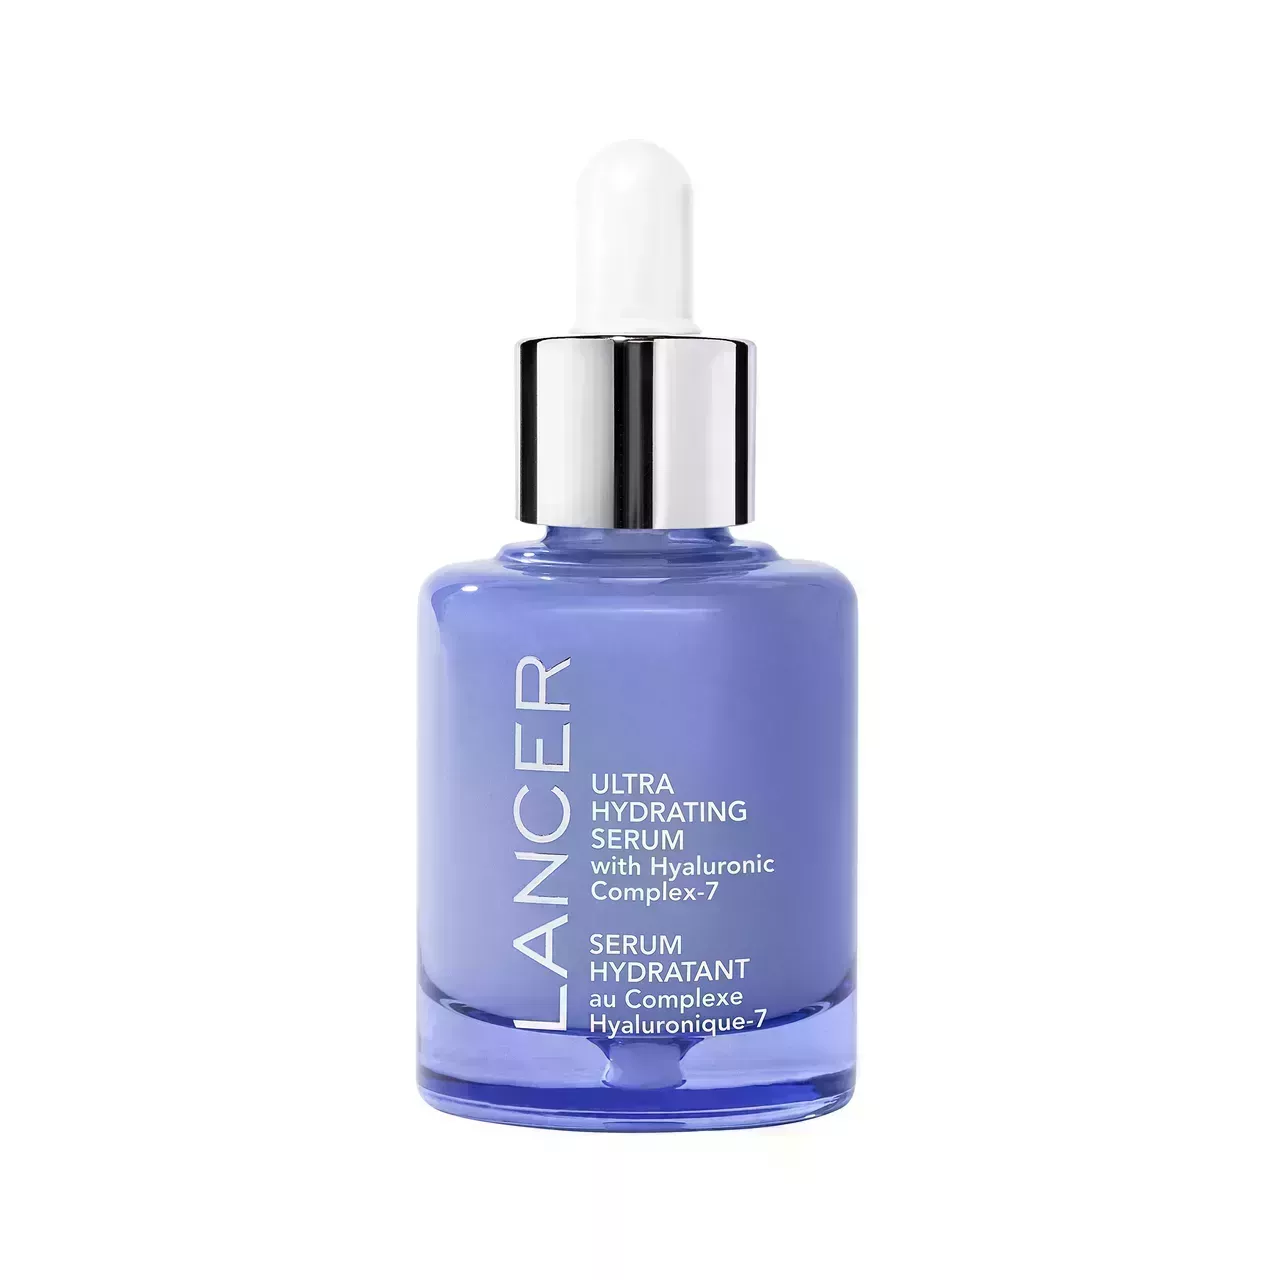 Lancer Skincare Ultra Hydrating Serum blue serum bottle on white background